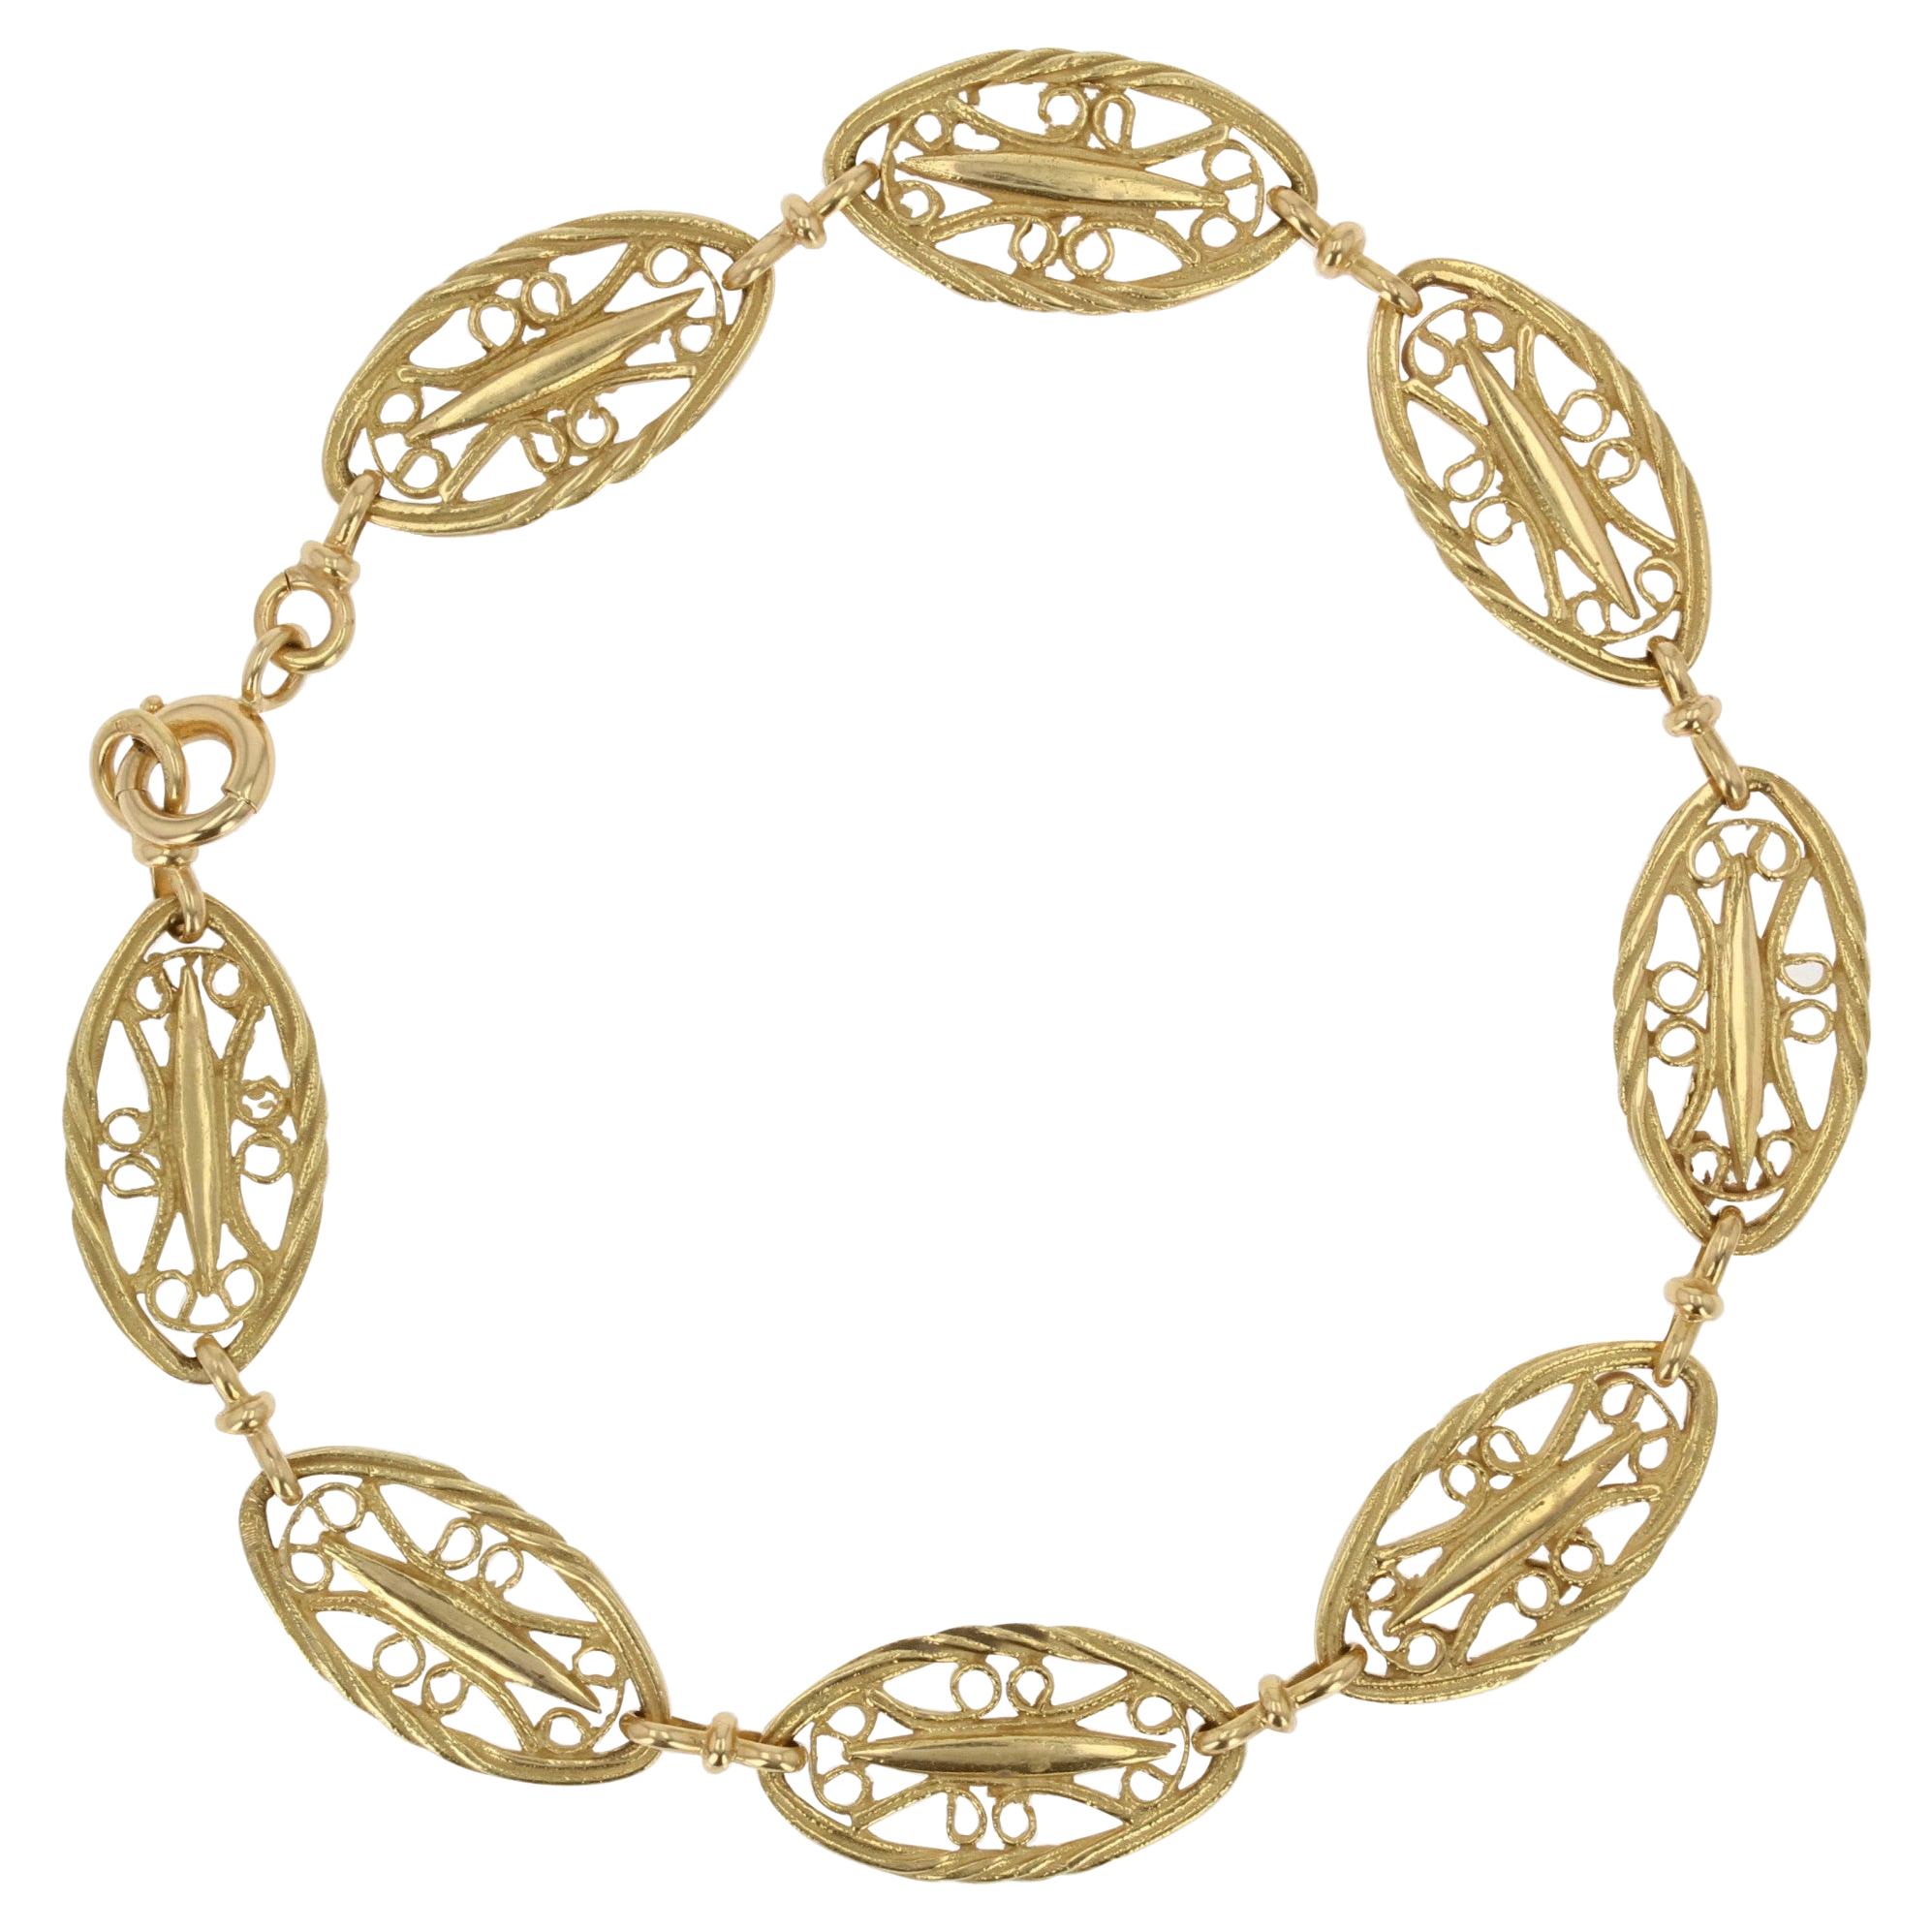 French Belle Epoque Style 18 Karat Yellow Gold Filigree Bracelet